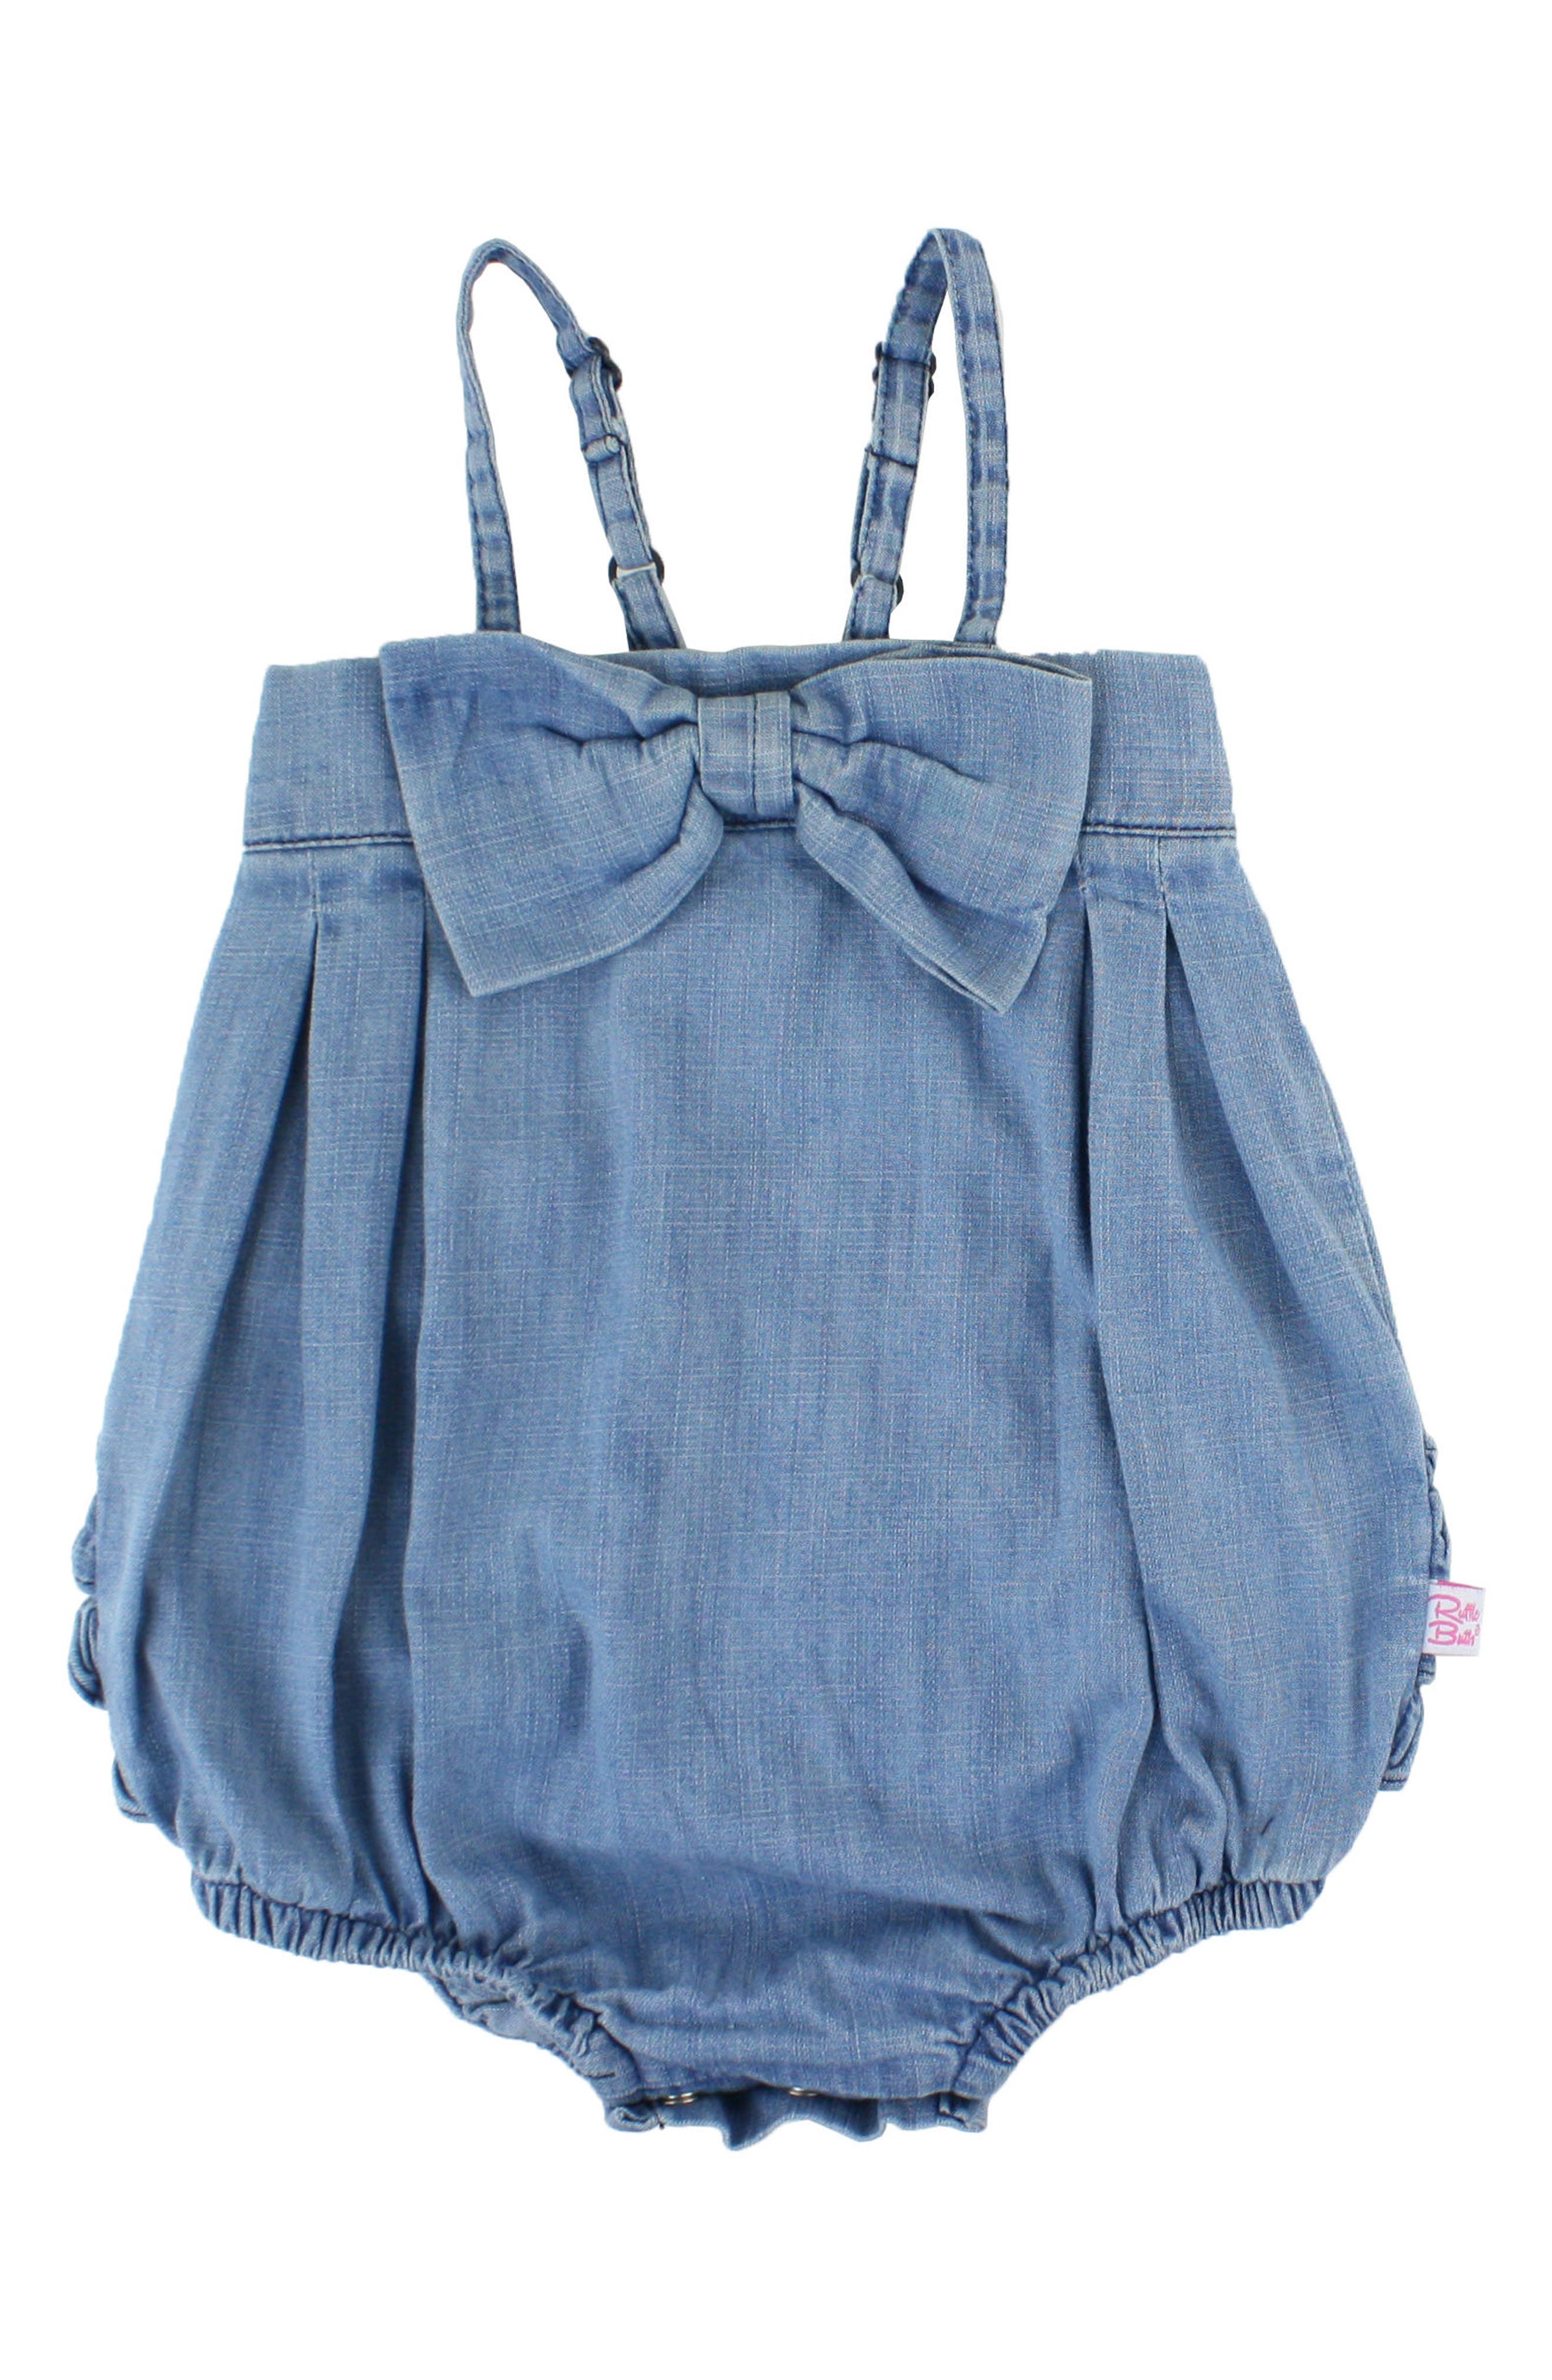 RuffleButts Baby/Toddler Girls Ruffled Denim Skirt with Bow